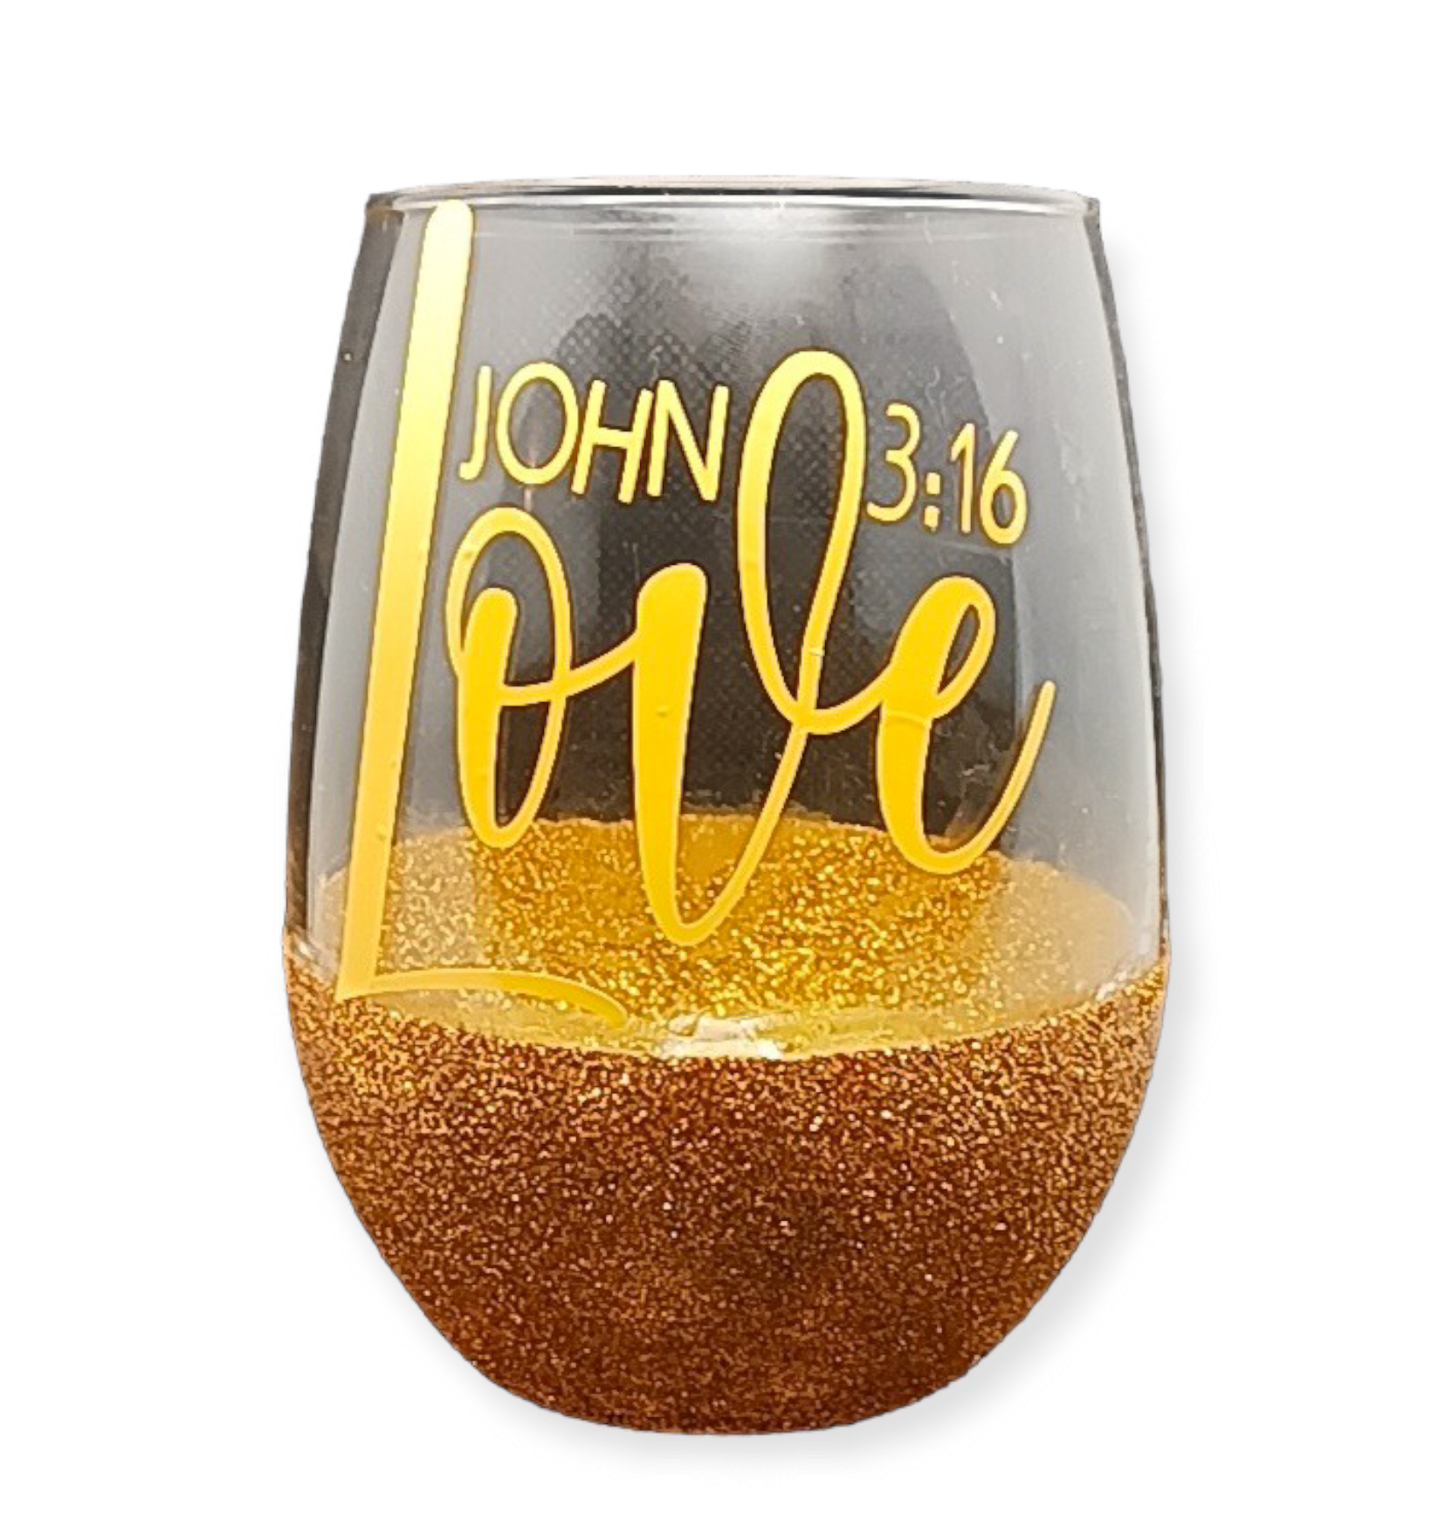 Hope Faith Love Glitter Wine Glass Collection